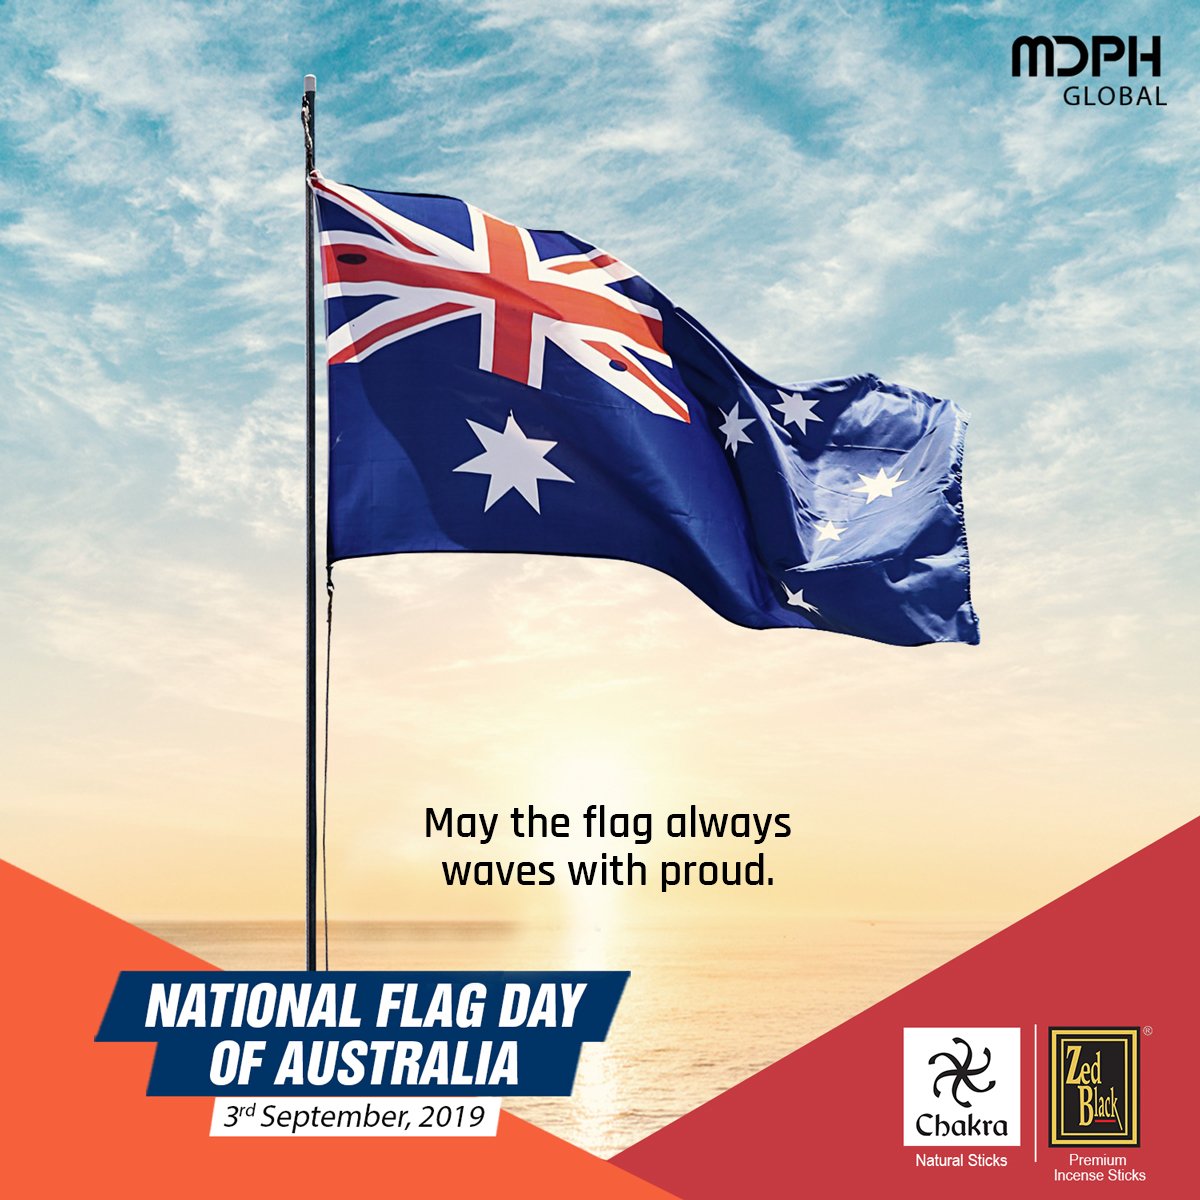 let's always value and respect our #flag.

#NationalFlagDay #Australia #FlagDay #celebrate #Australian #MDPHGlobal #ZedBlack #ChakraAroma #Incense #aroma #chakra #motivation #premium #positivity #Anniversary #natural #September #Sydney #Melbourne #patriotic #proud #respect